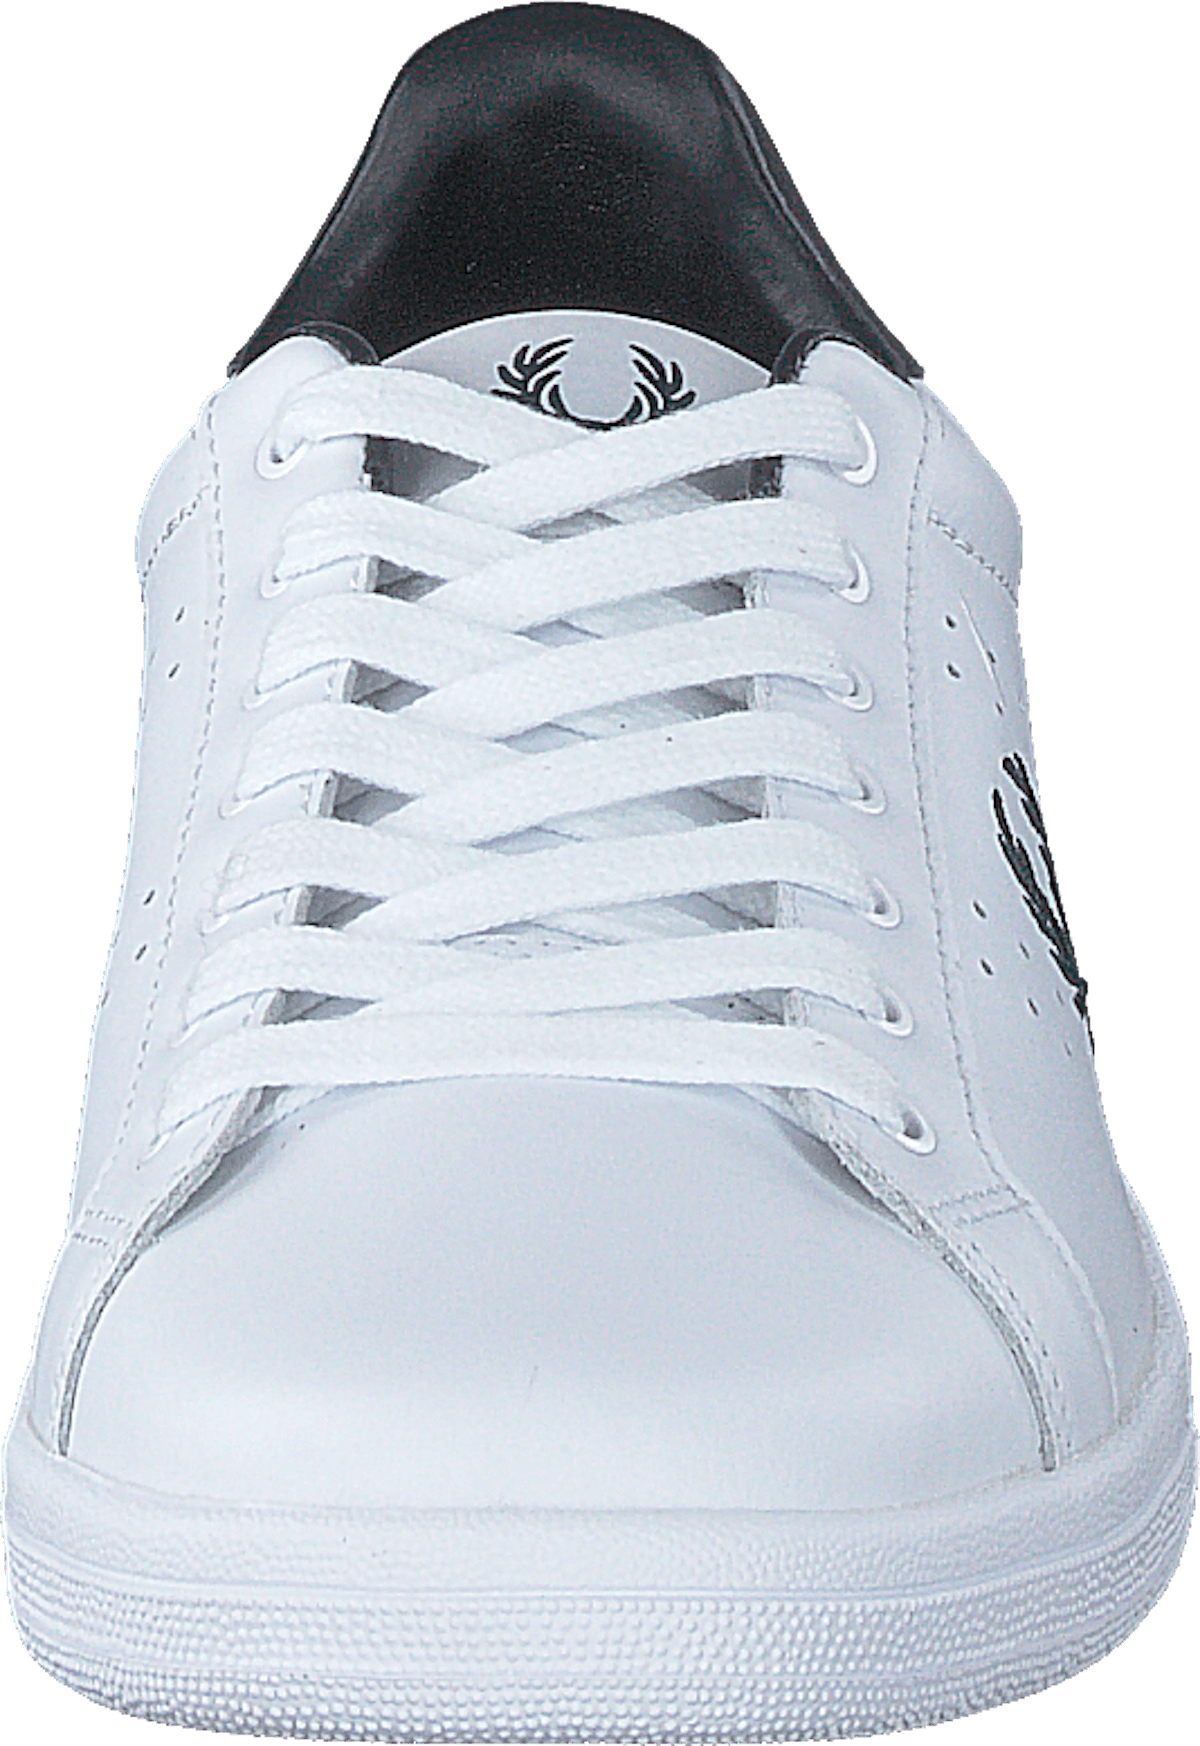 B6201 Leather White/navy